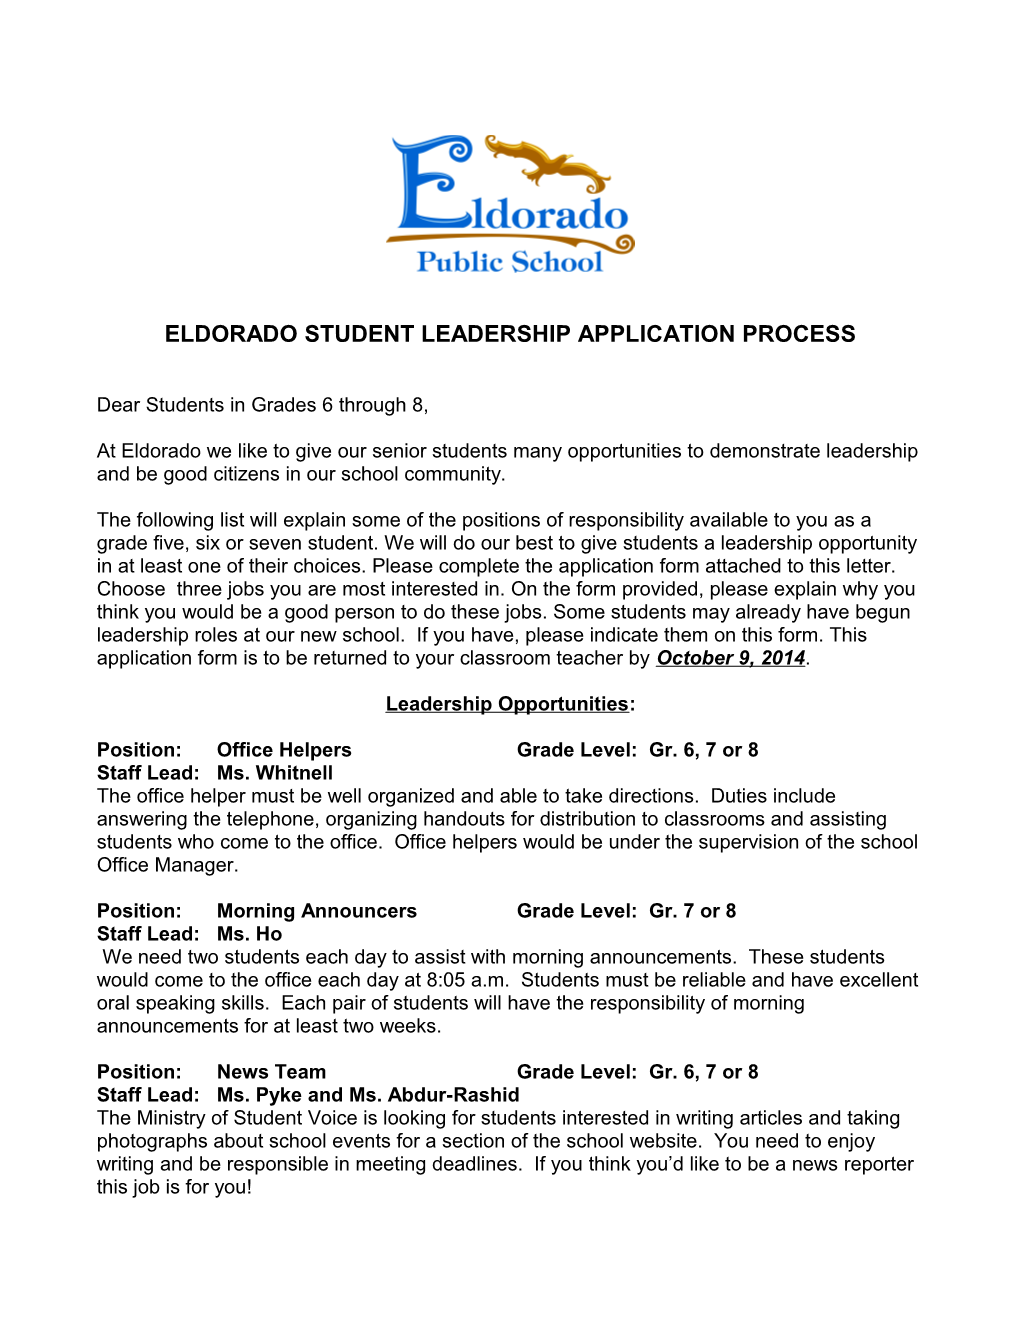 Eldorado Student Leadership Application Process